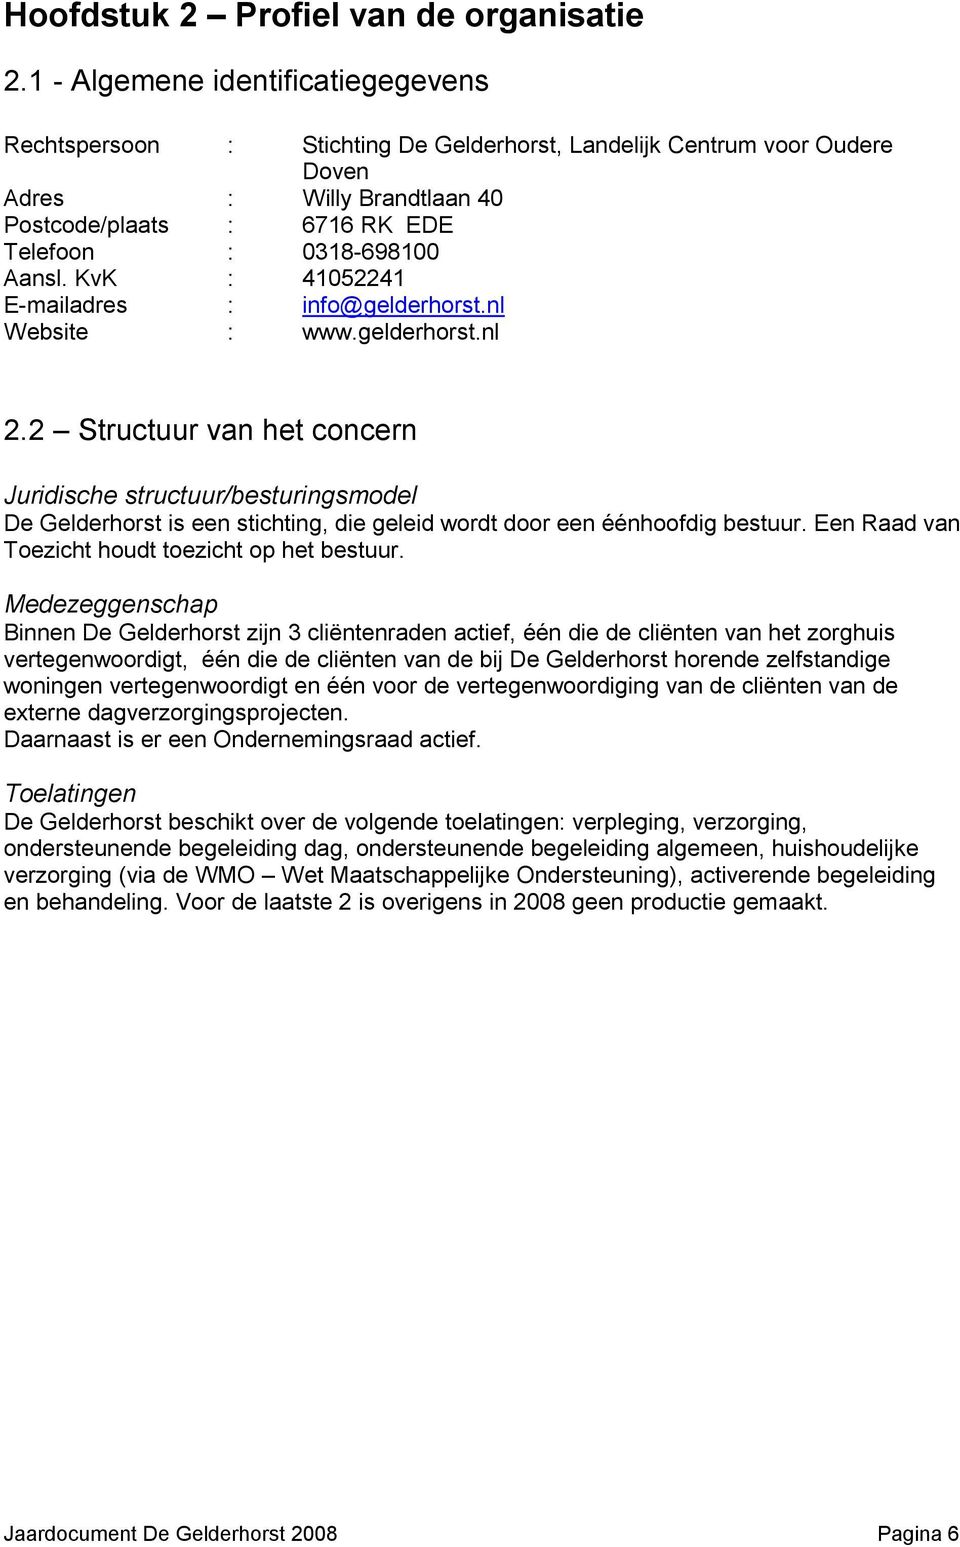 KvK : 41052241 E-mailadres : info@gelderhorst.nl Website : www.gelderhorst.nl 2.